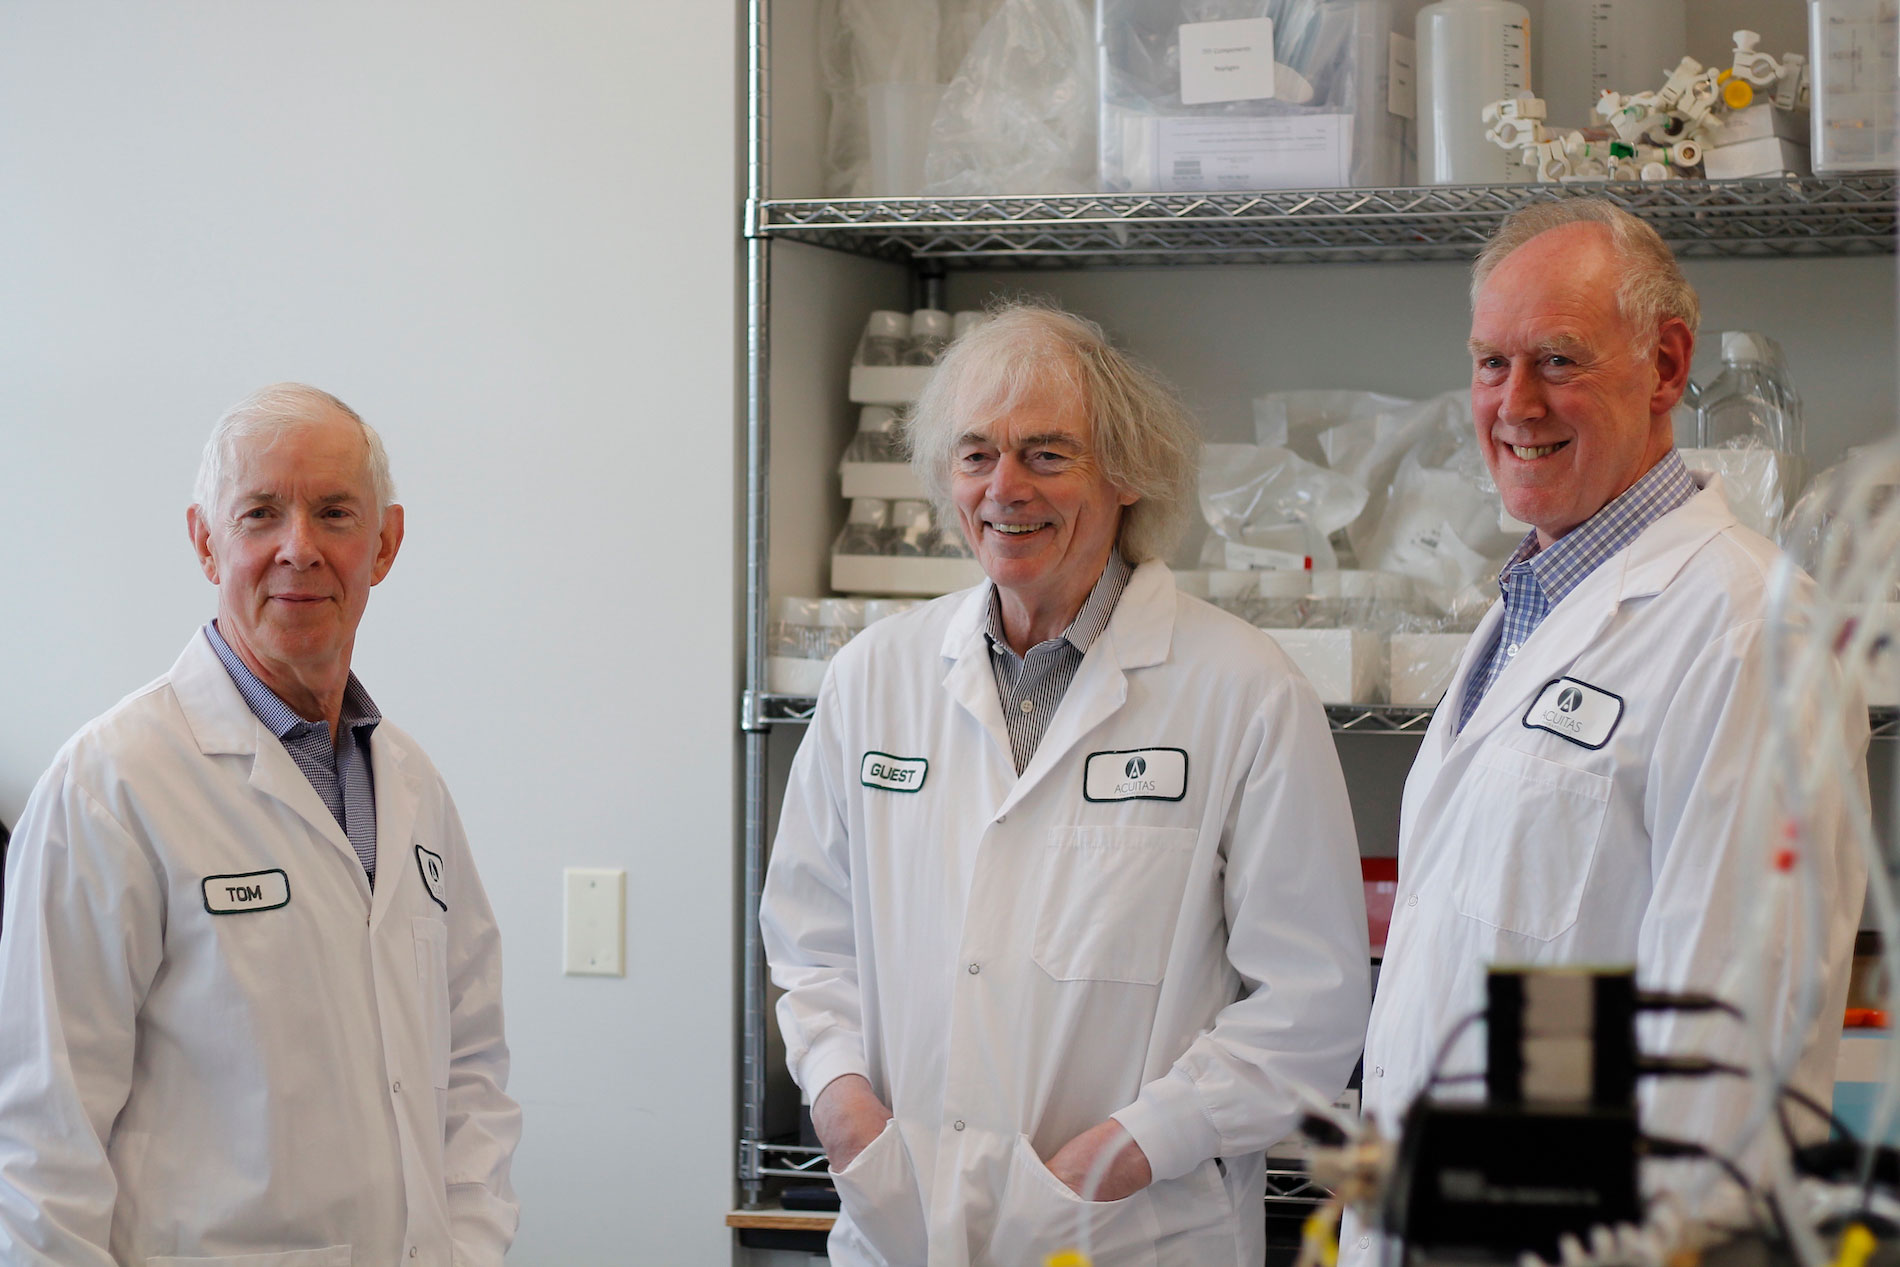 three people dressed in lab coats posing